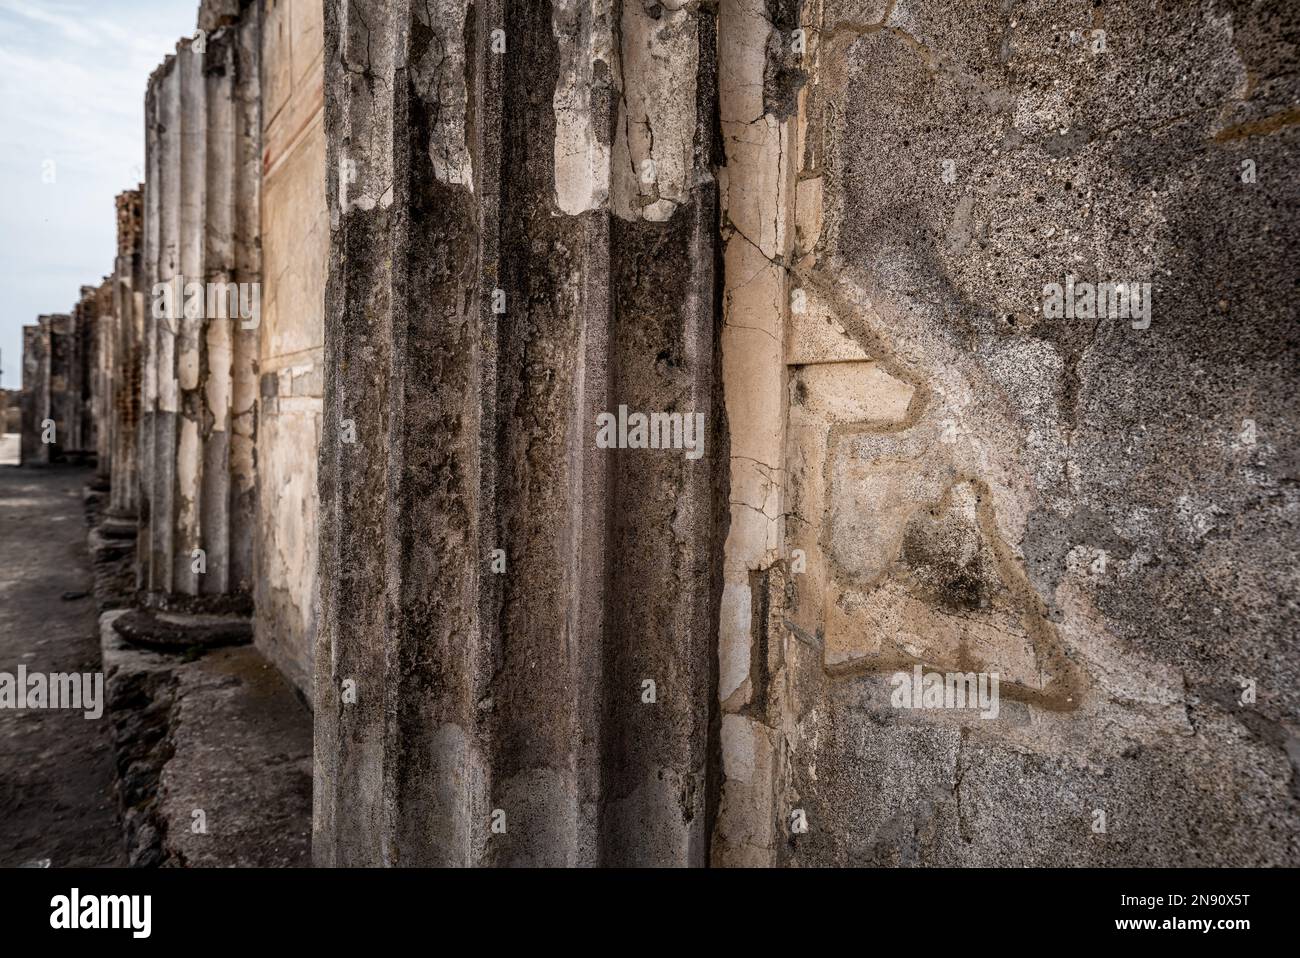 Closeup of columns in ancient Roman city of Pompeii Stock Photo